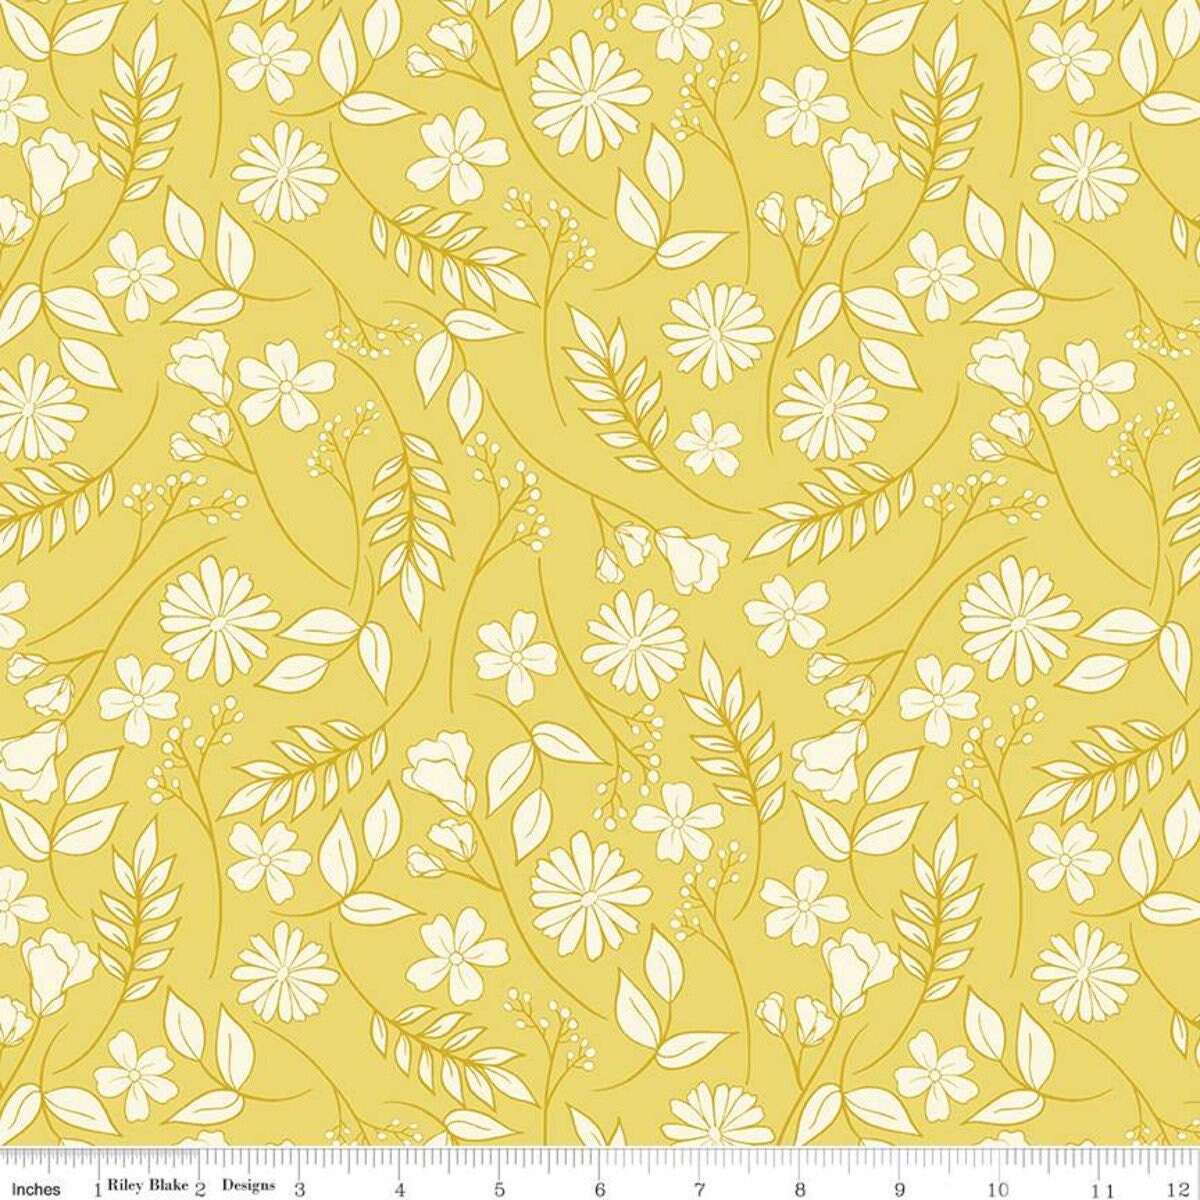 Reflections Flower Garden Lemon Yellow - LAMINATED Cotton Fabric - Riley Blake